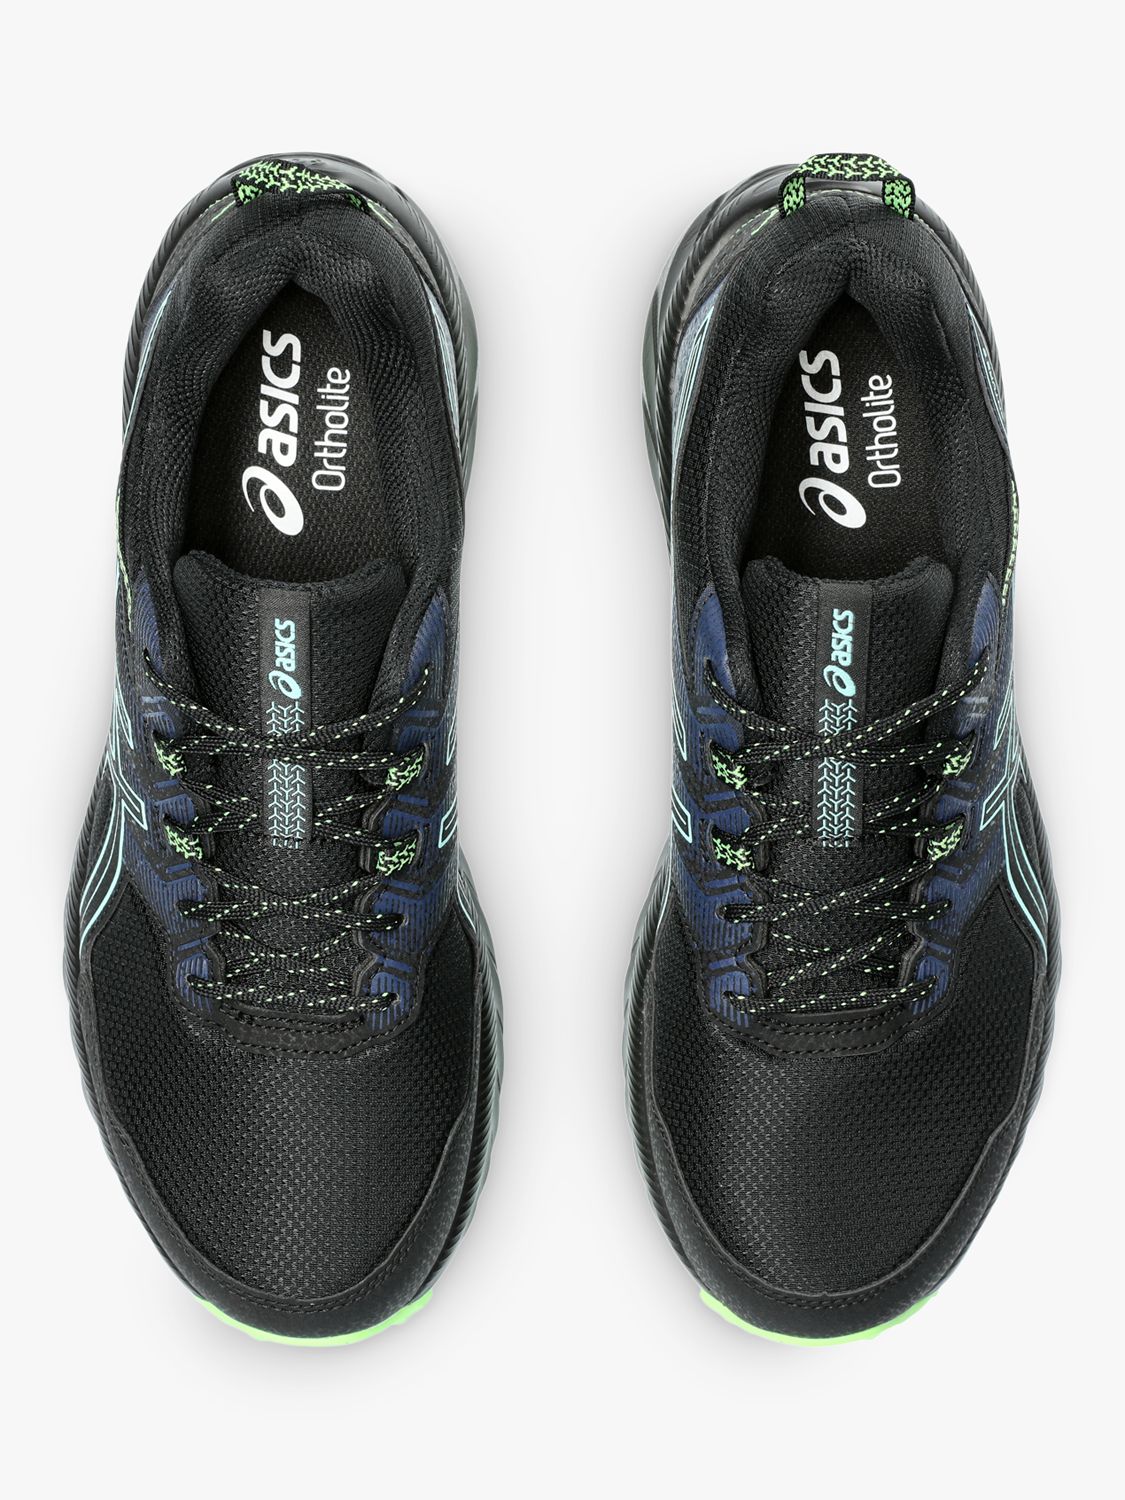 ASICS GEL-VENTURE 9 Men's Running Shoes, Black/Mint, 7